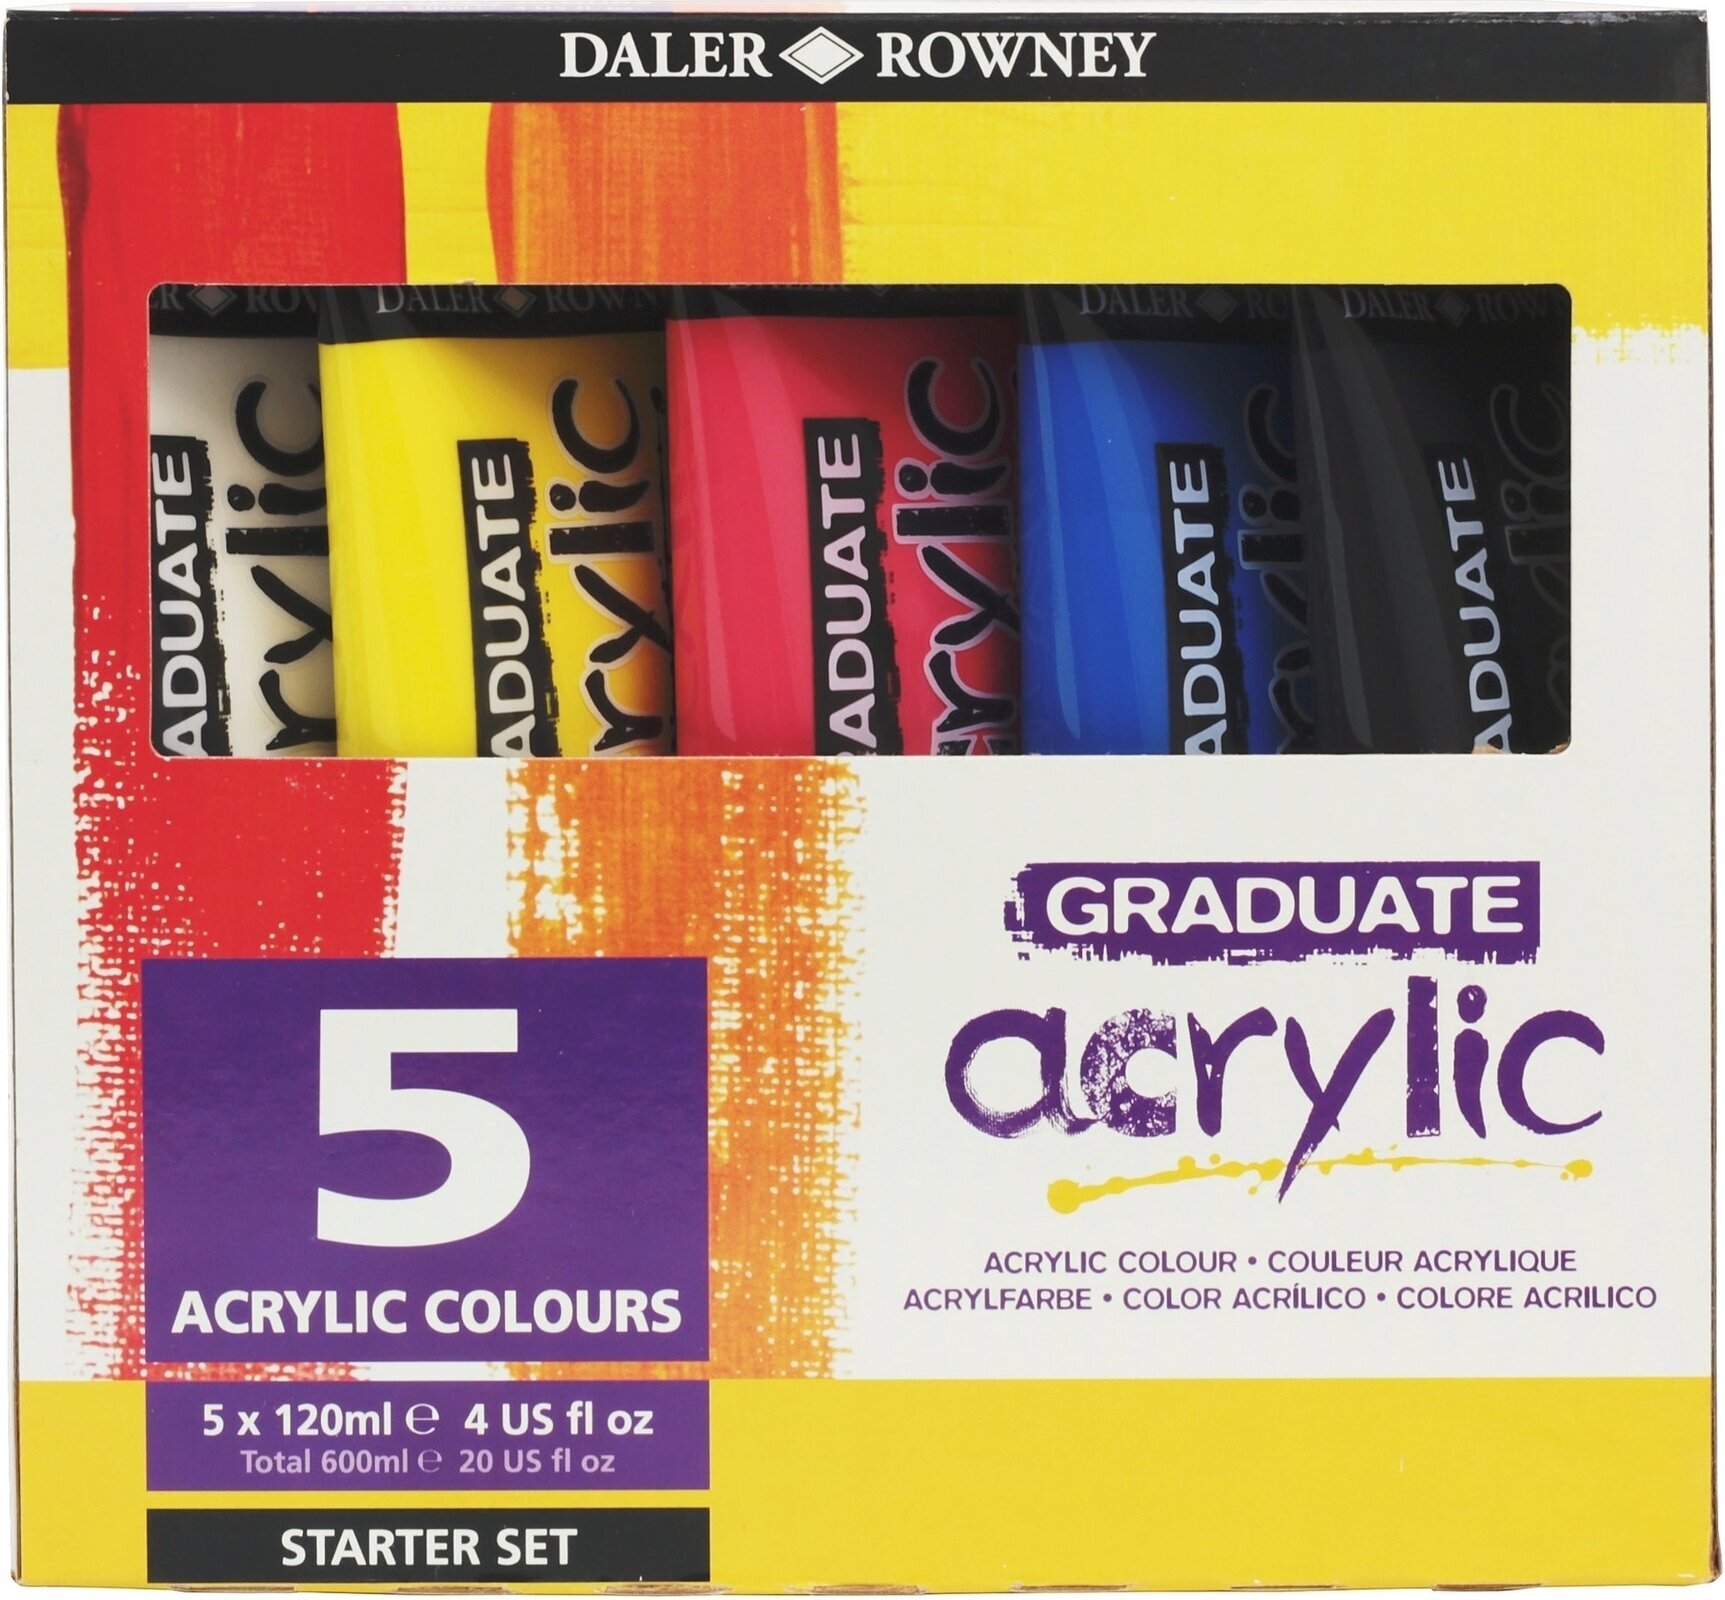 Acrylic Paint Daler Rowney Graduate Set of Acrylic Paints 5 x 120 ml